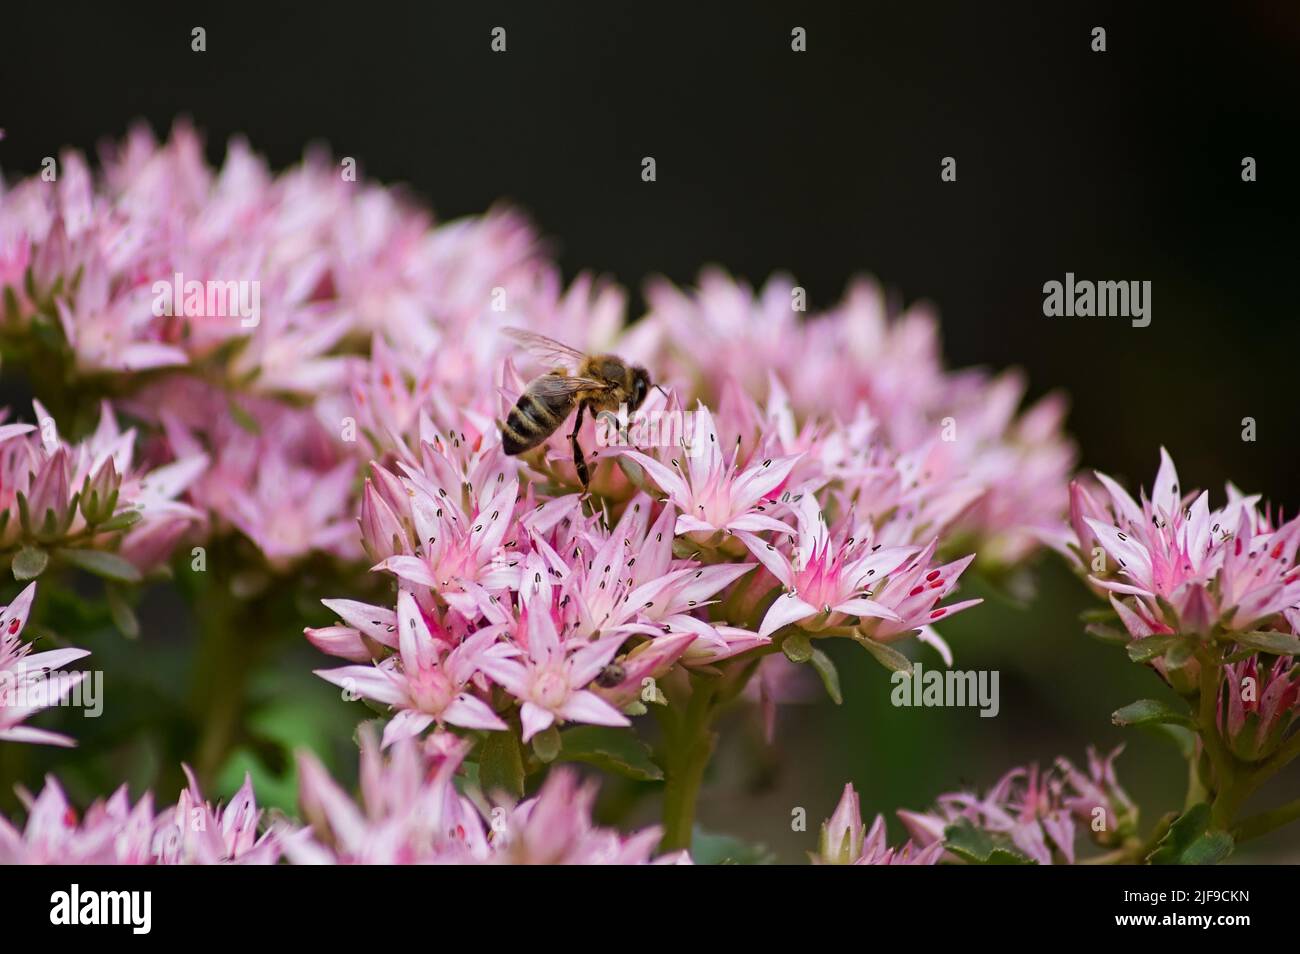 Worker bee on pink (Sedum spectabile) flower bush with soft focus background Stock Photo